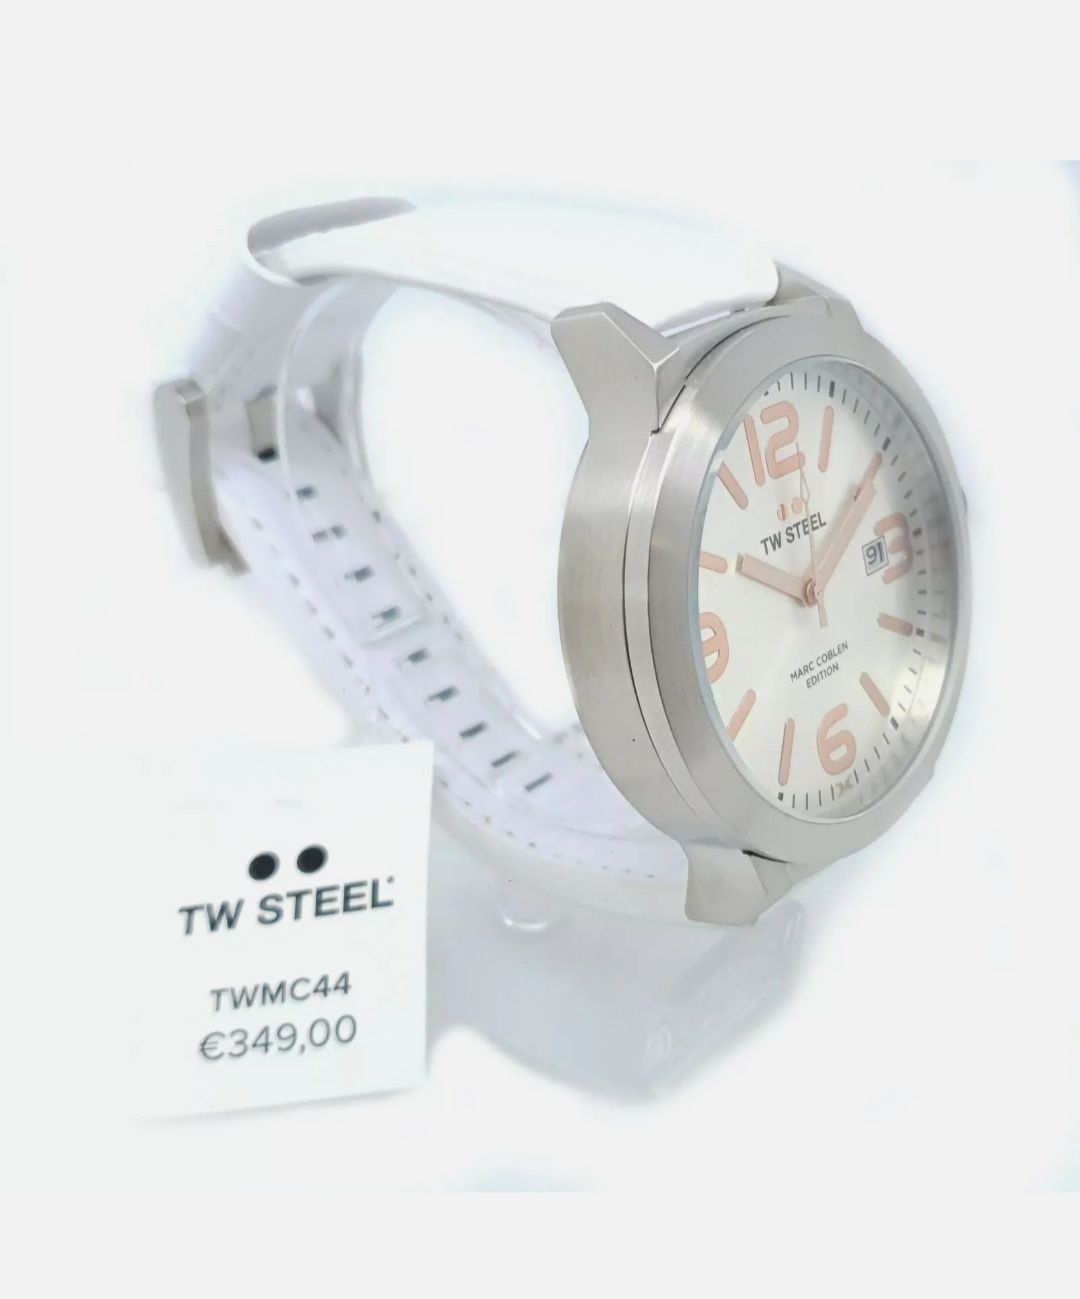 Relógio TW Steel TWMC44 Novo!